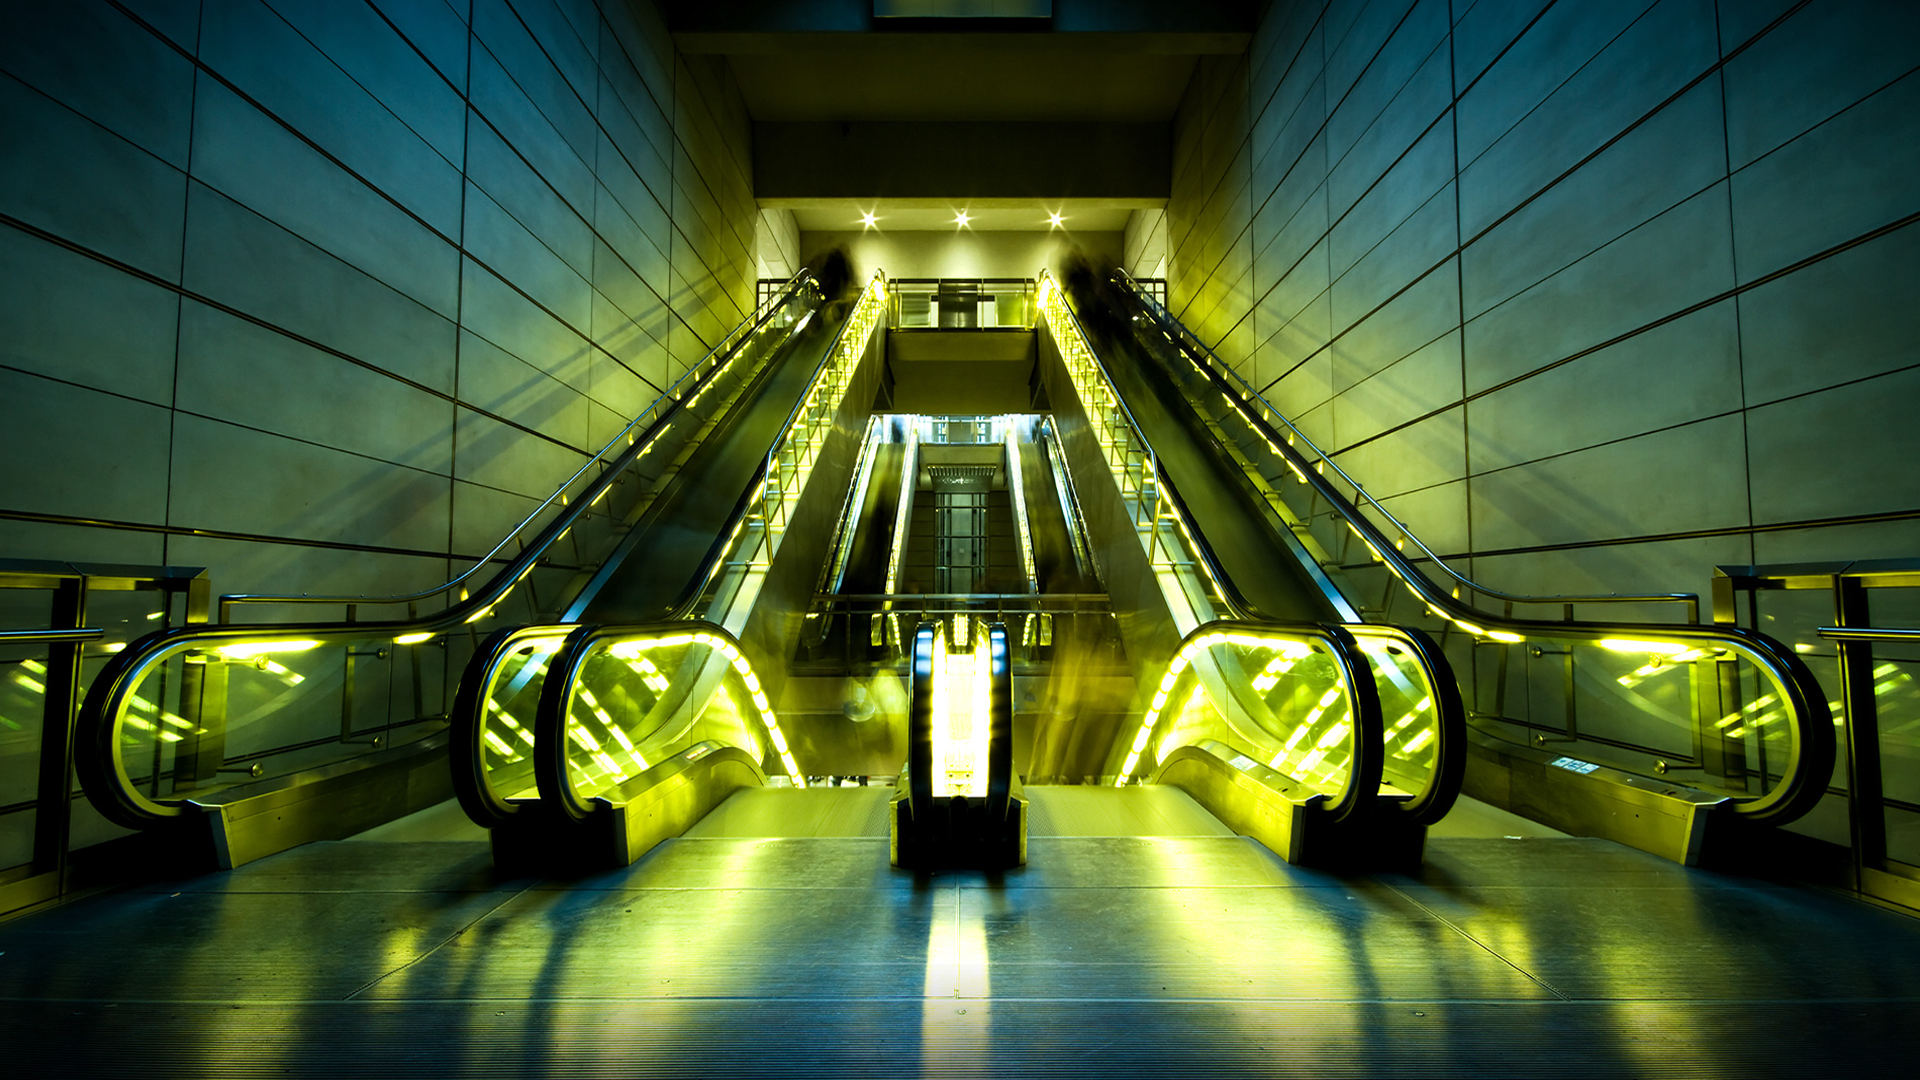 General 1920x1080 lights escalator yellow stairs urban subway